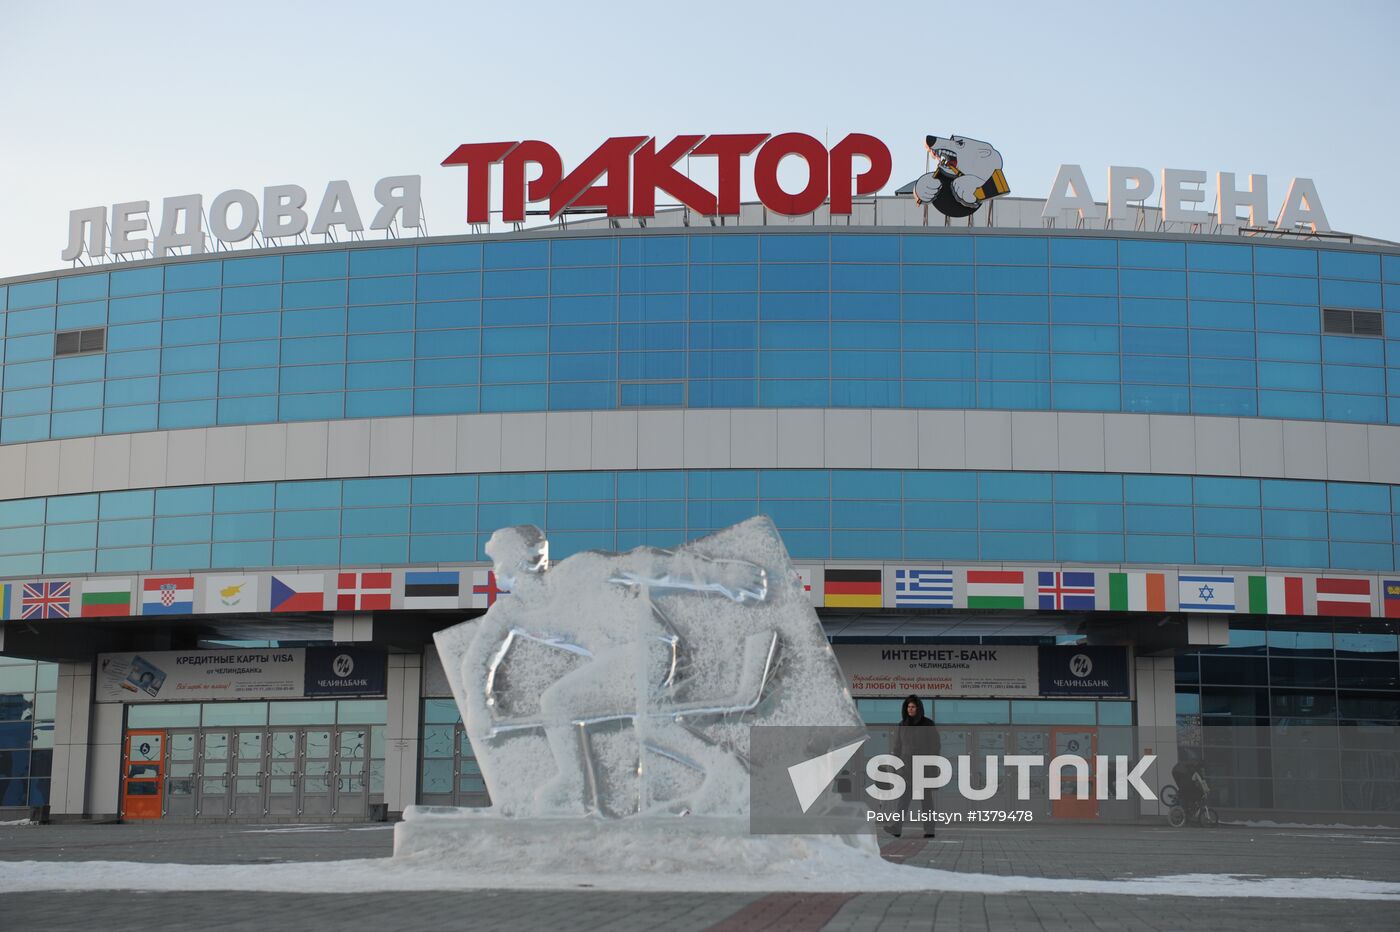 Traktor Ice Arena in Chelyabinsk